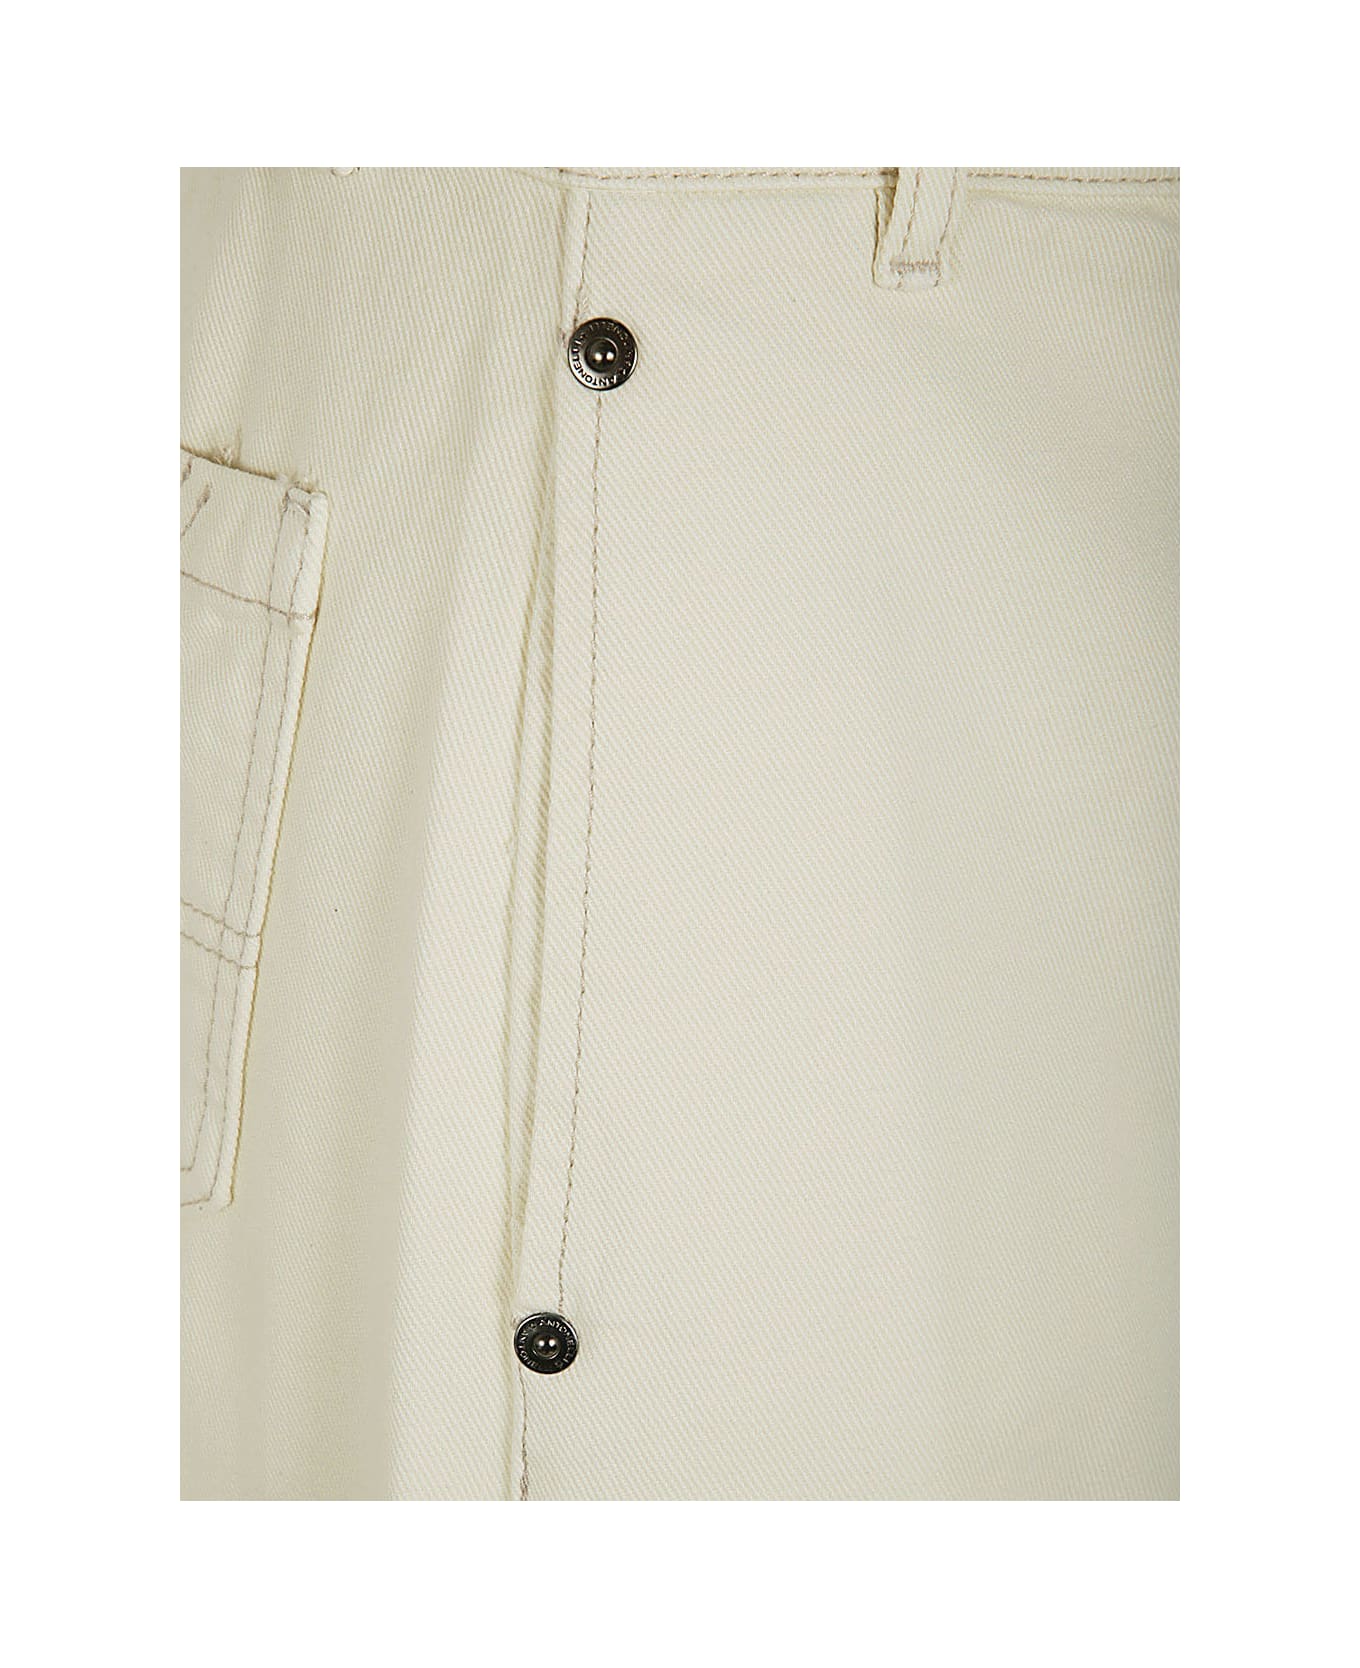 Antonelli Iago Denim Skirt With Slit - Cream スカート